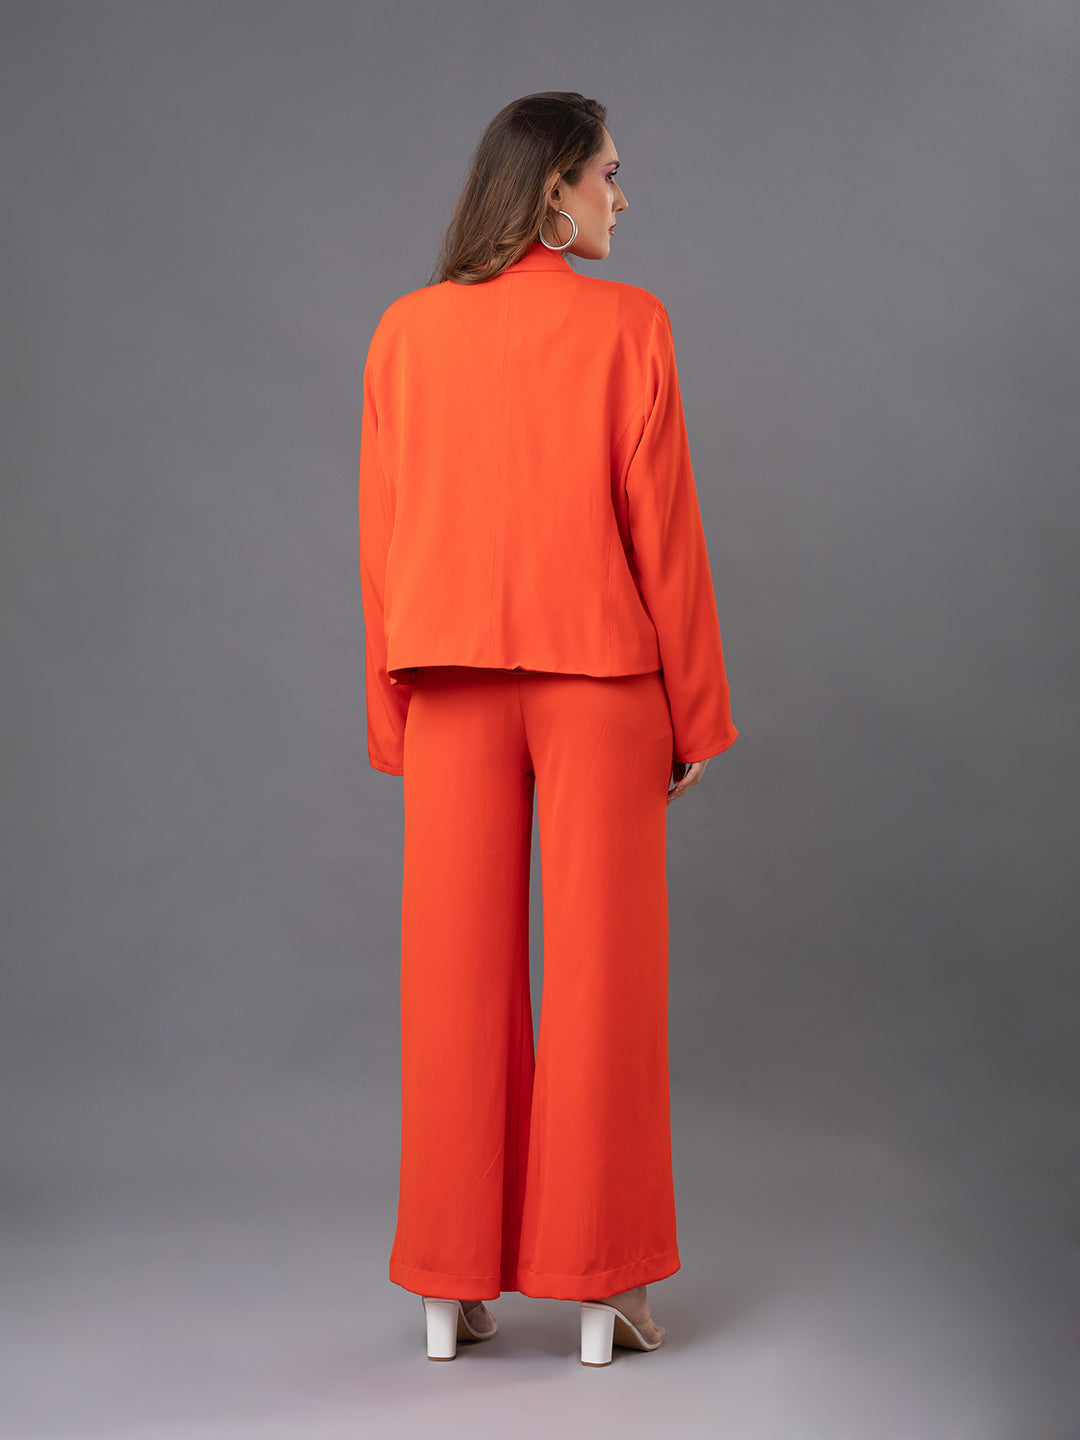 Valentina Blazer Corset Set - Flame Orange